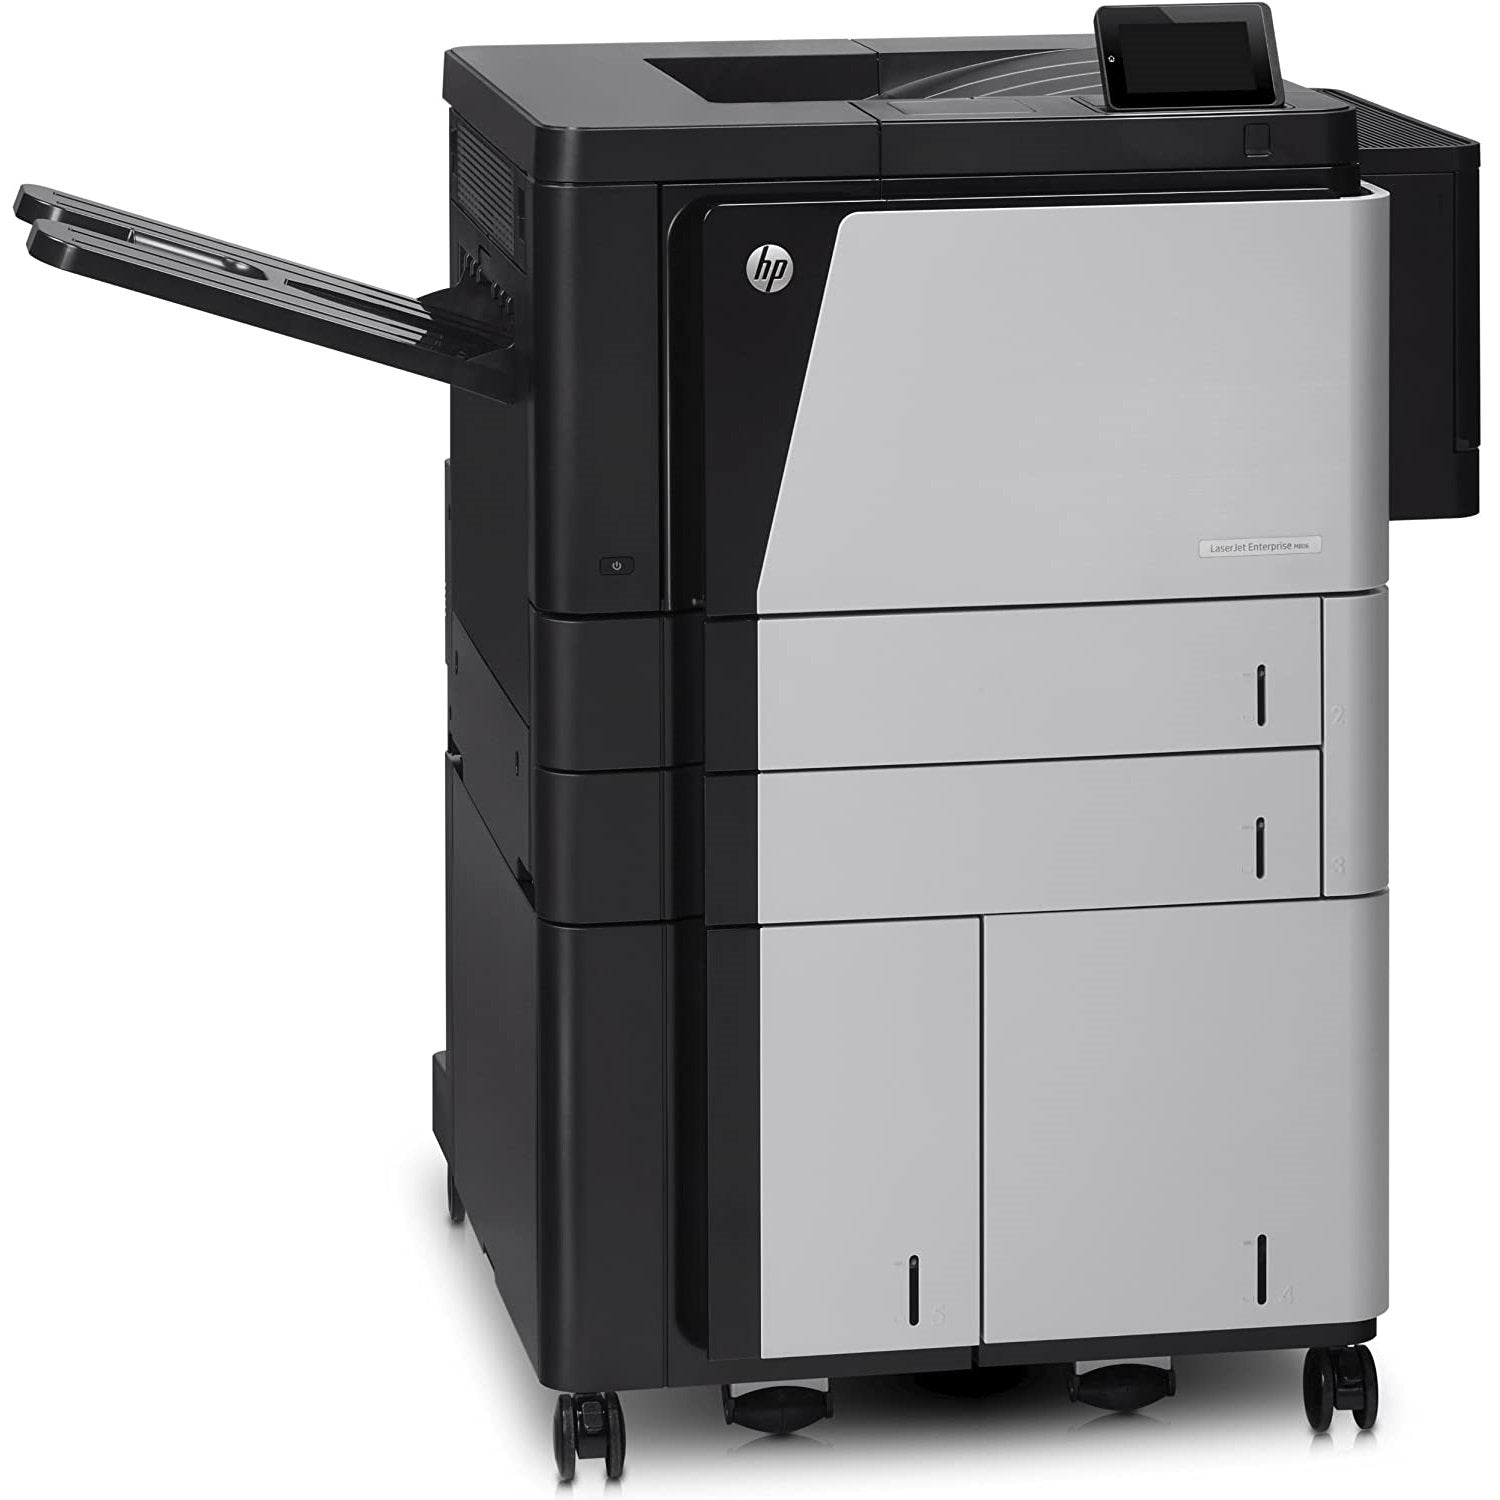 Absolute Toner HP LaserJet Enterprise M806 (Meter Only 3700 pages) Super High Speed Monochrome Multifunction Laser Printer, 11x17 Larger Economical Toner | M806x+ Black & White Laser Printer Showroom Monochrome Copiers